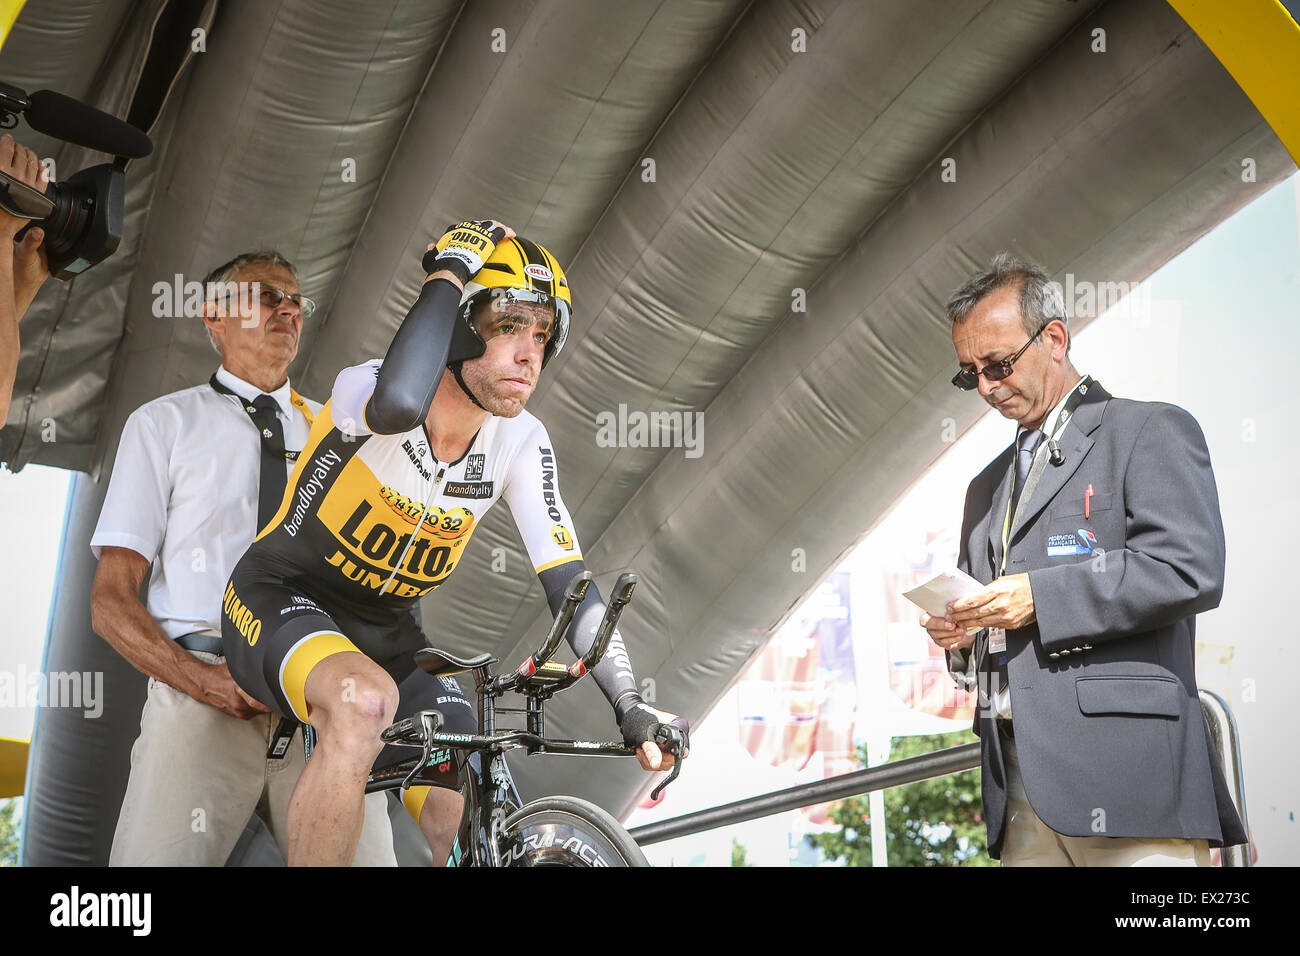 Utrecht, Paesi Bassi. 4 Luglio, 2015. Tour de France Time Trial Stage, BRAM TANKINK, Team Lotto Jumbo Credito: Jan de Wild/Alamy Live News Foto Stock